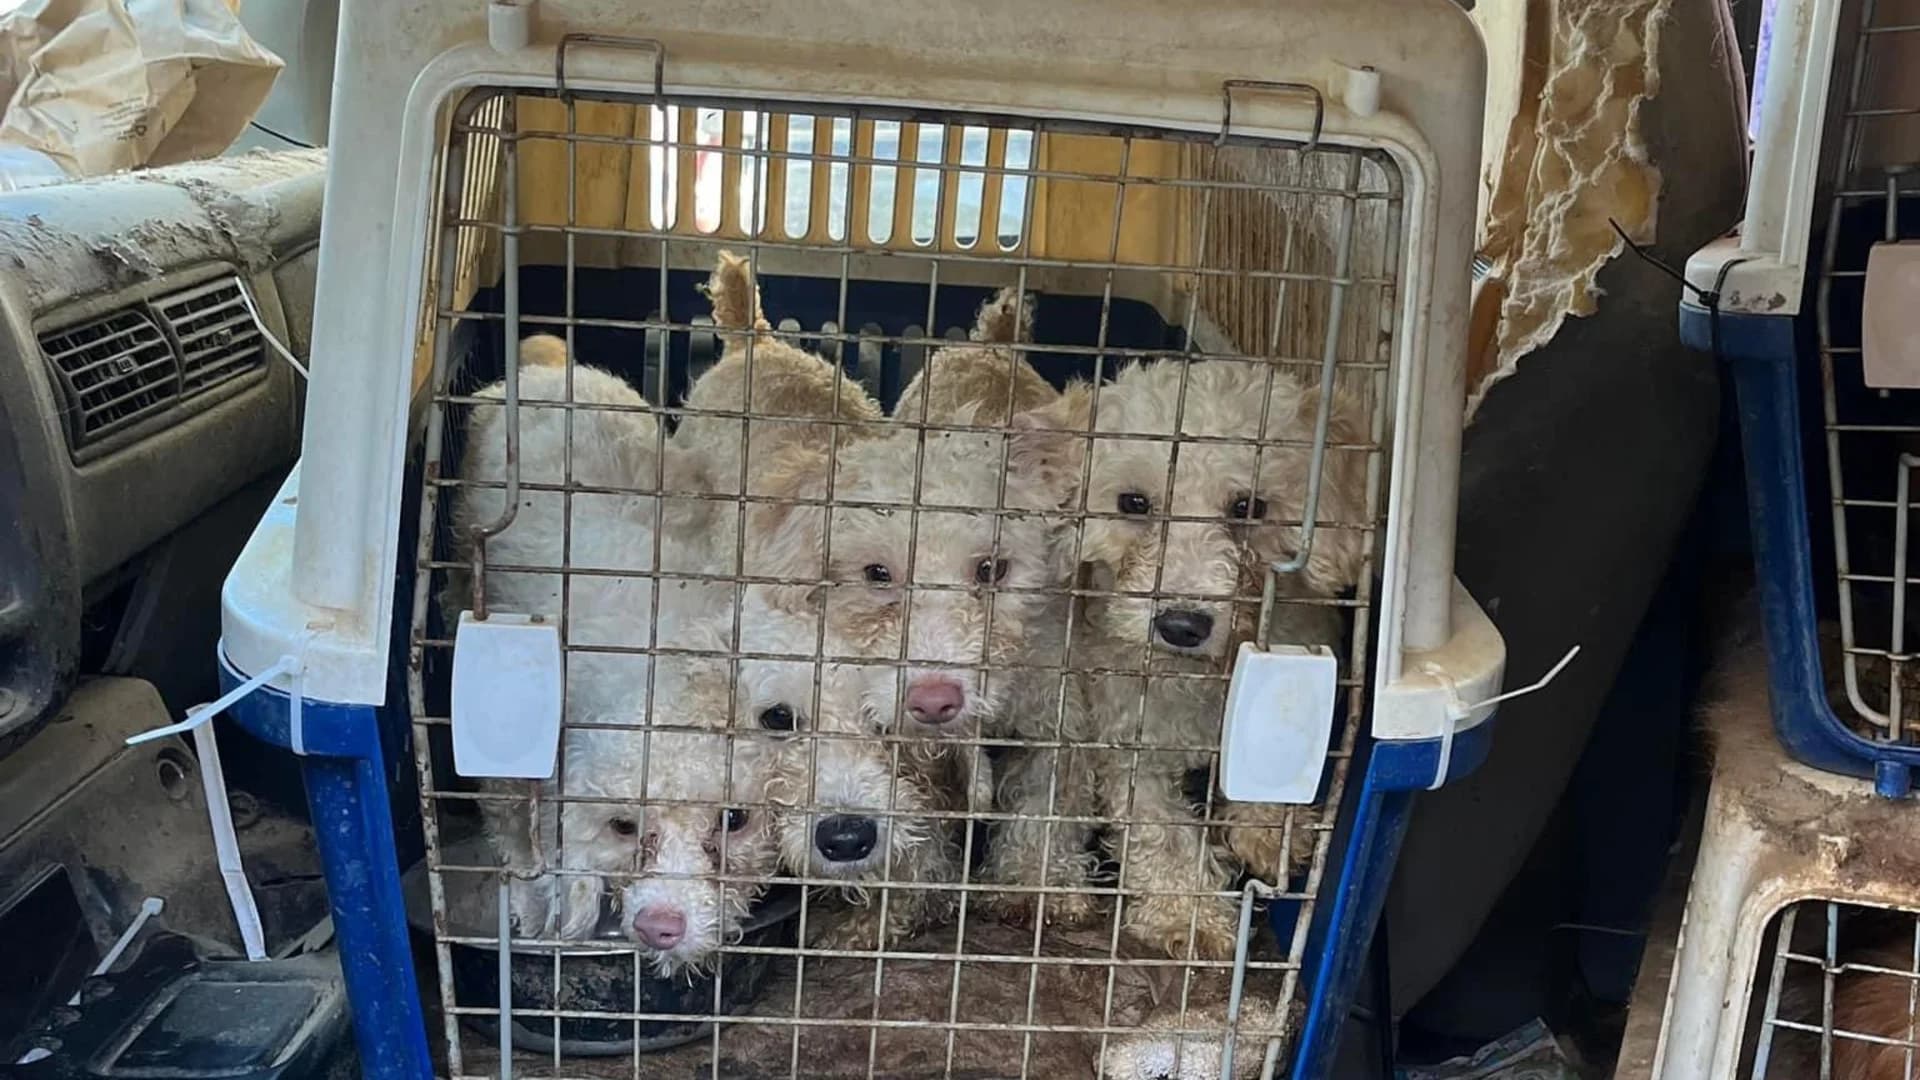 11 dogs found living inside crates in filthy van in Cortlandt Manor